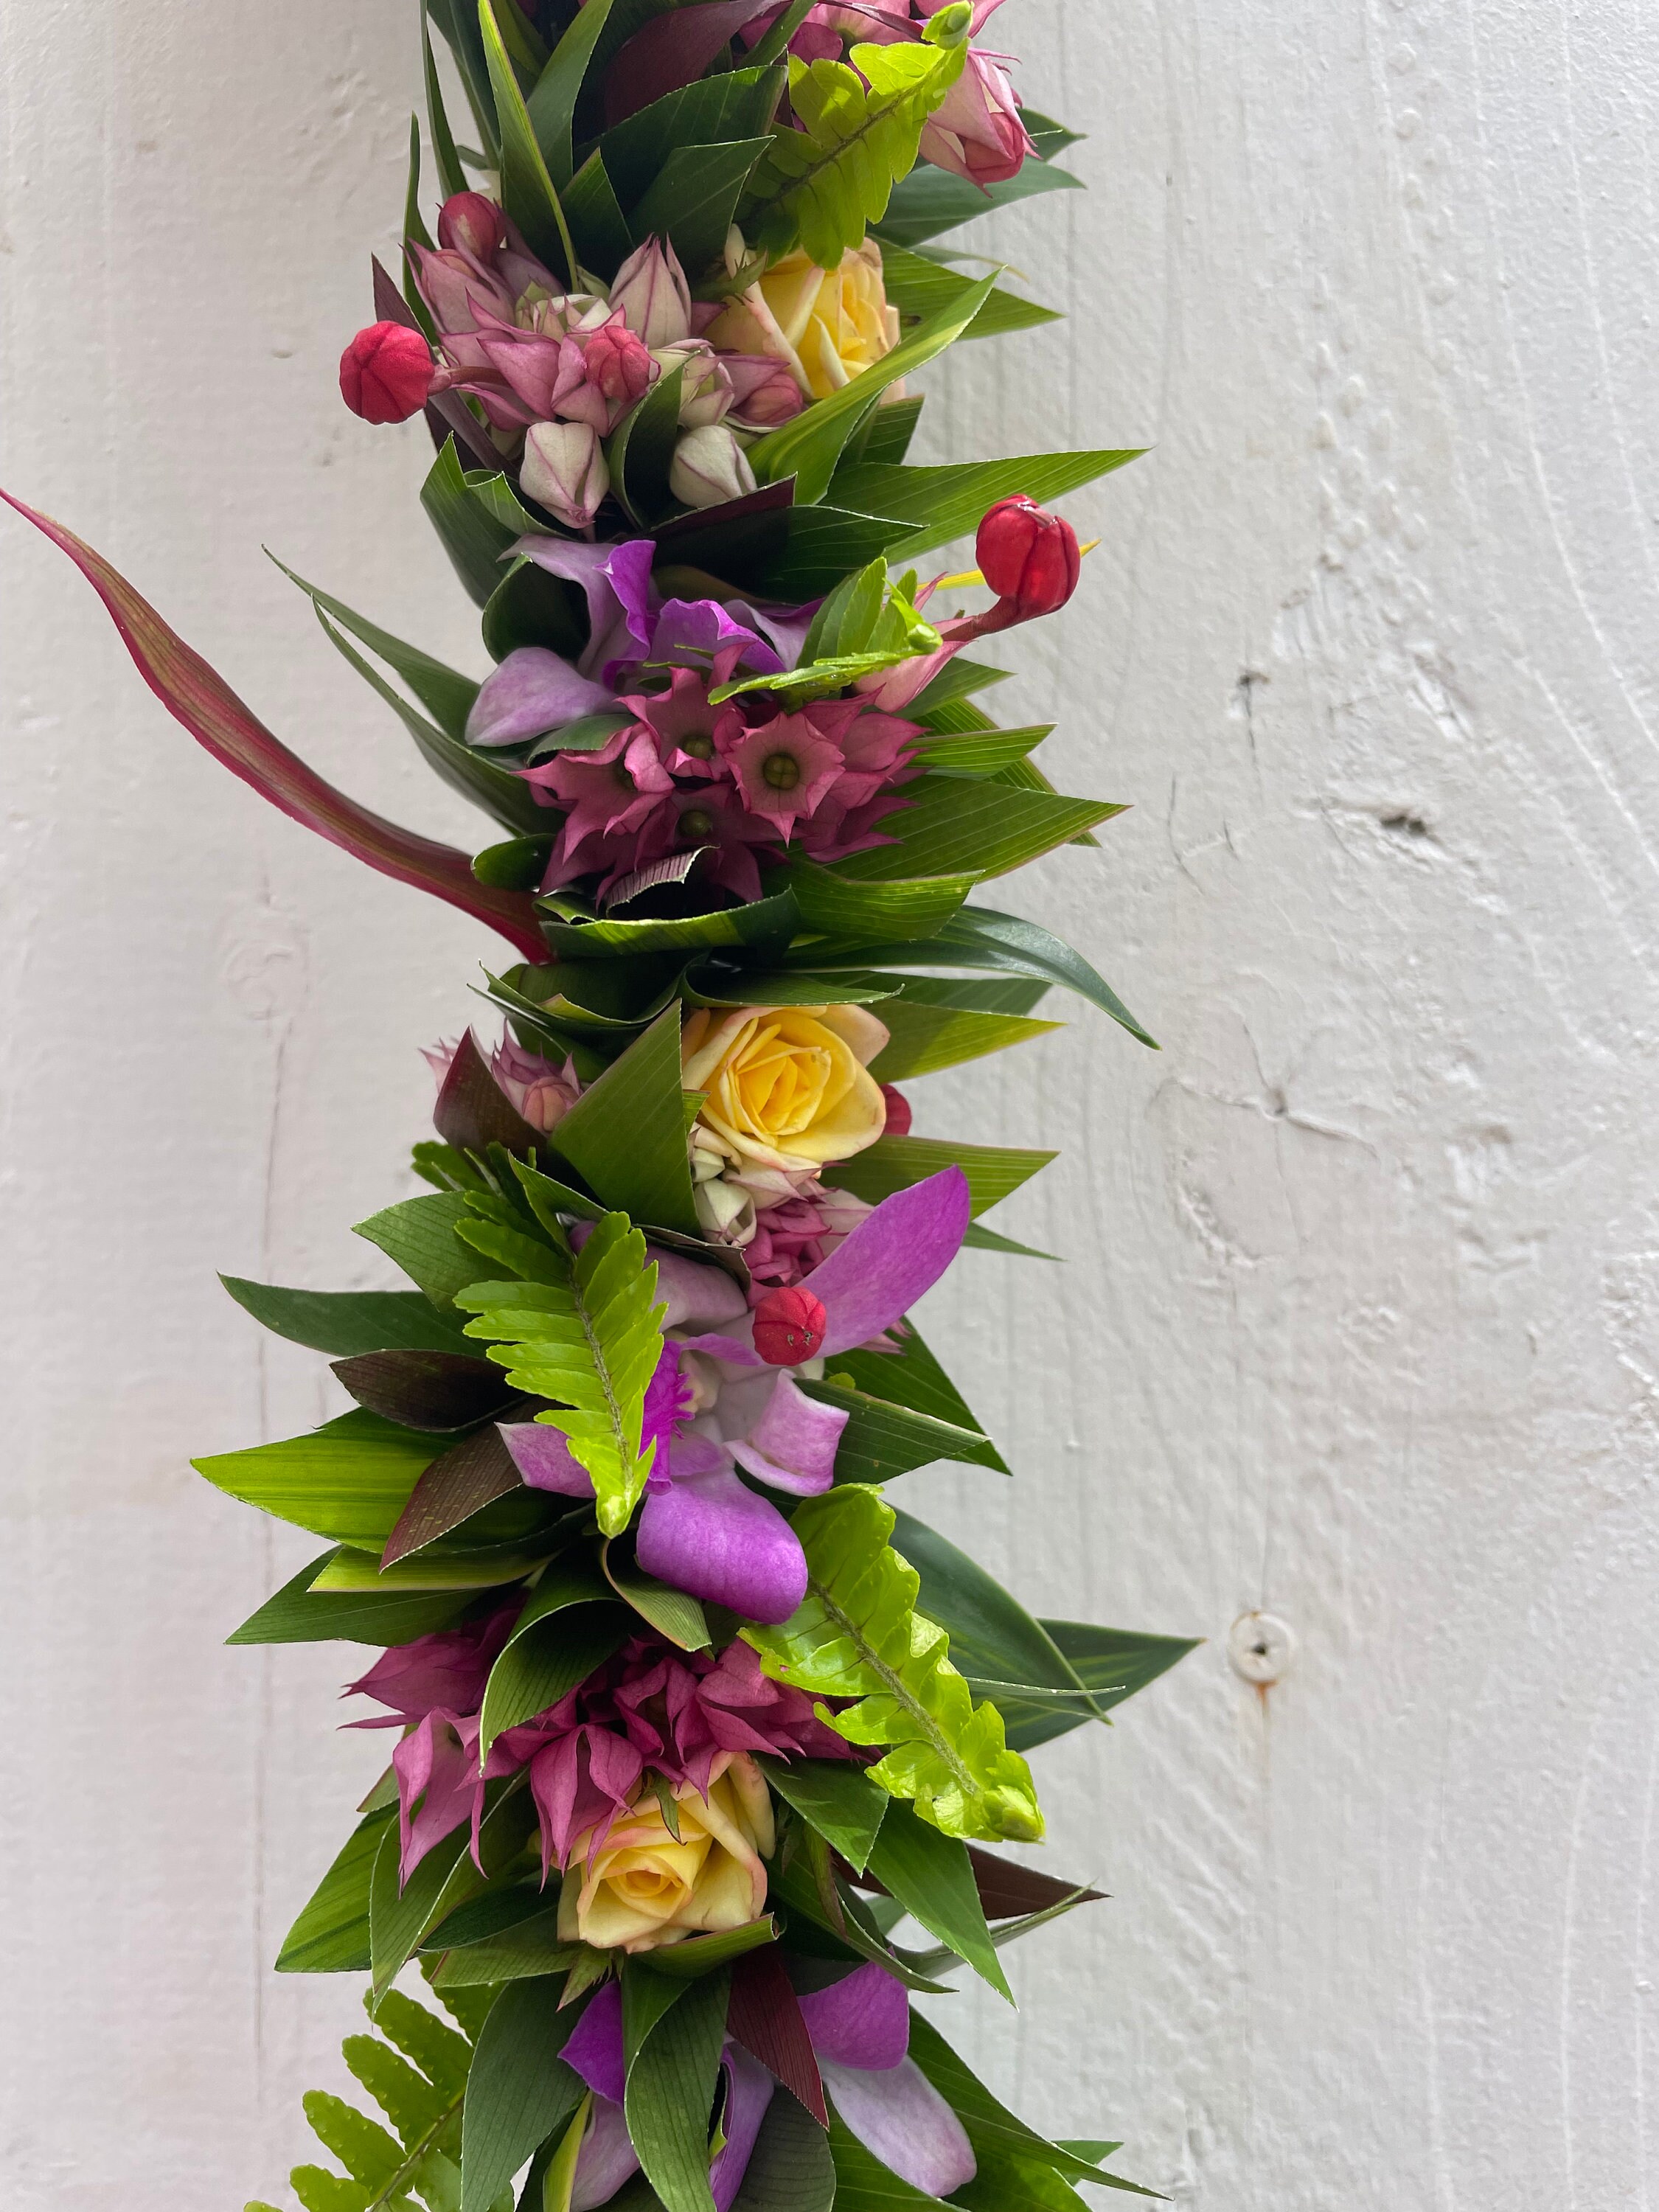 Haku, Lei Po'o ~ Flower Crown – Pukalani Floral